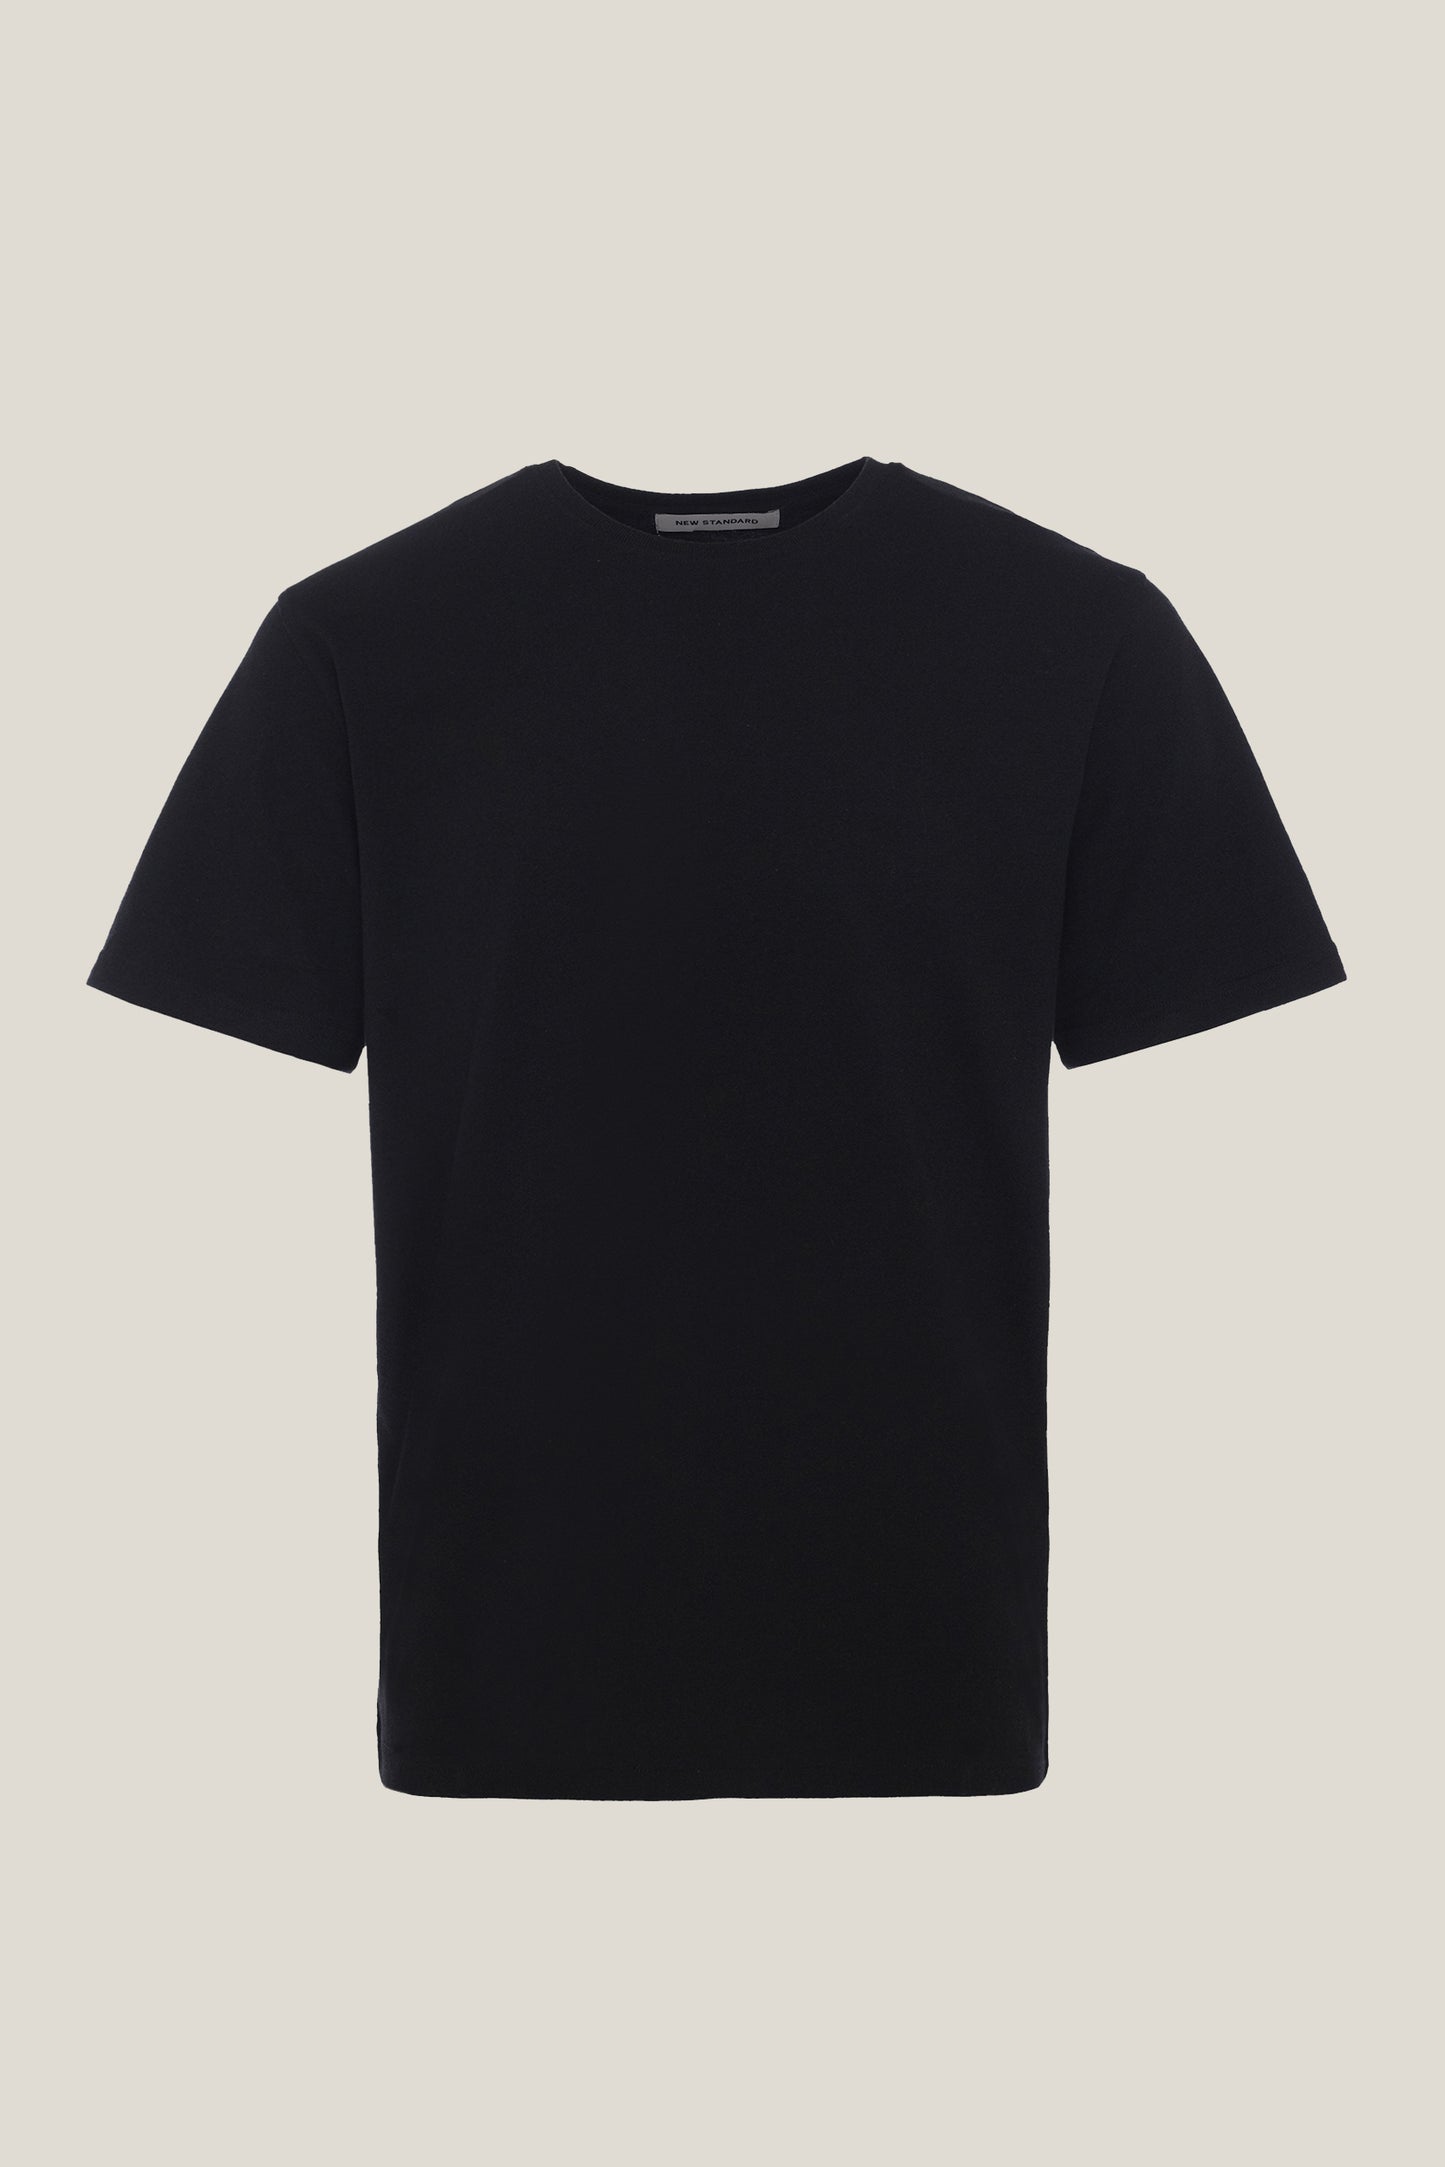 Men's t-shirt - Black